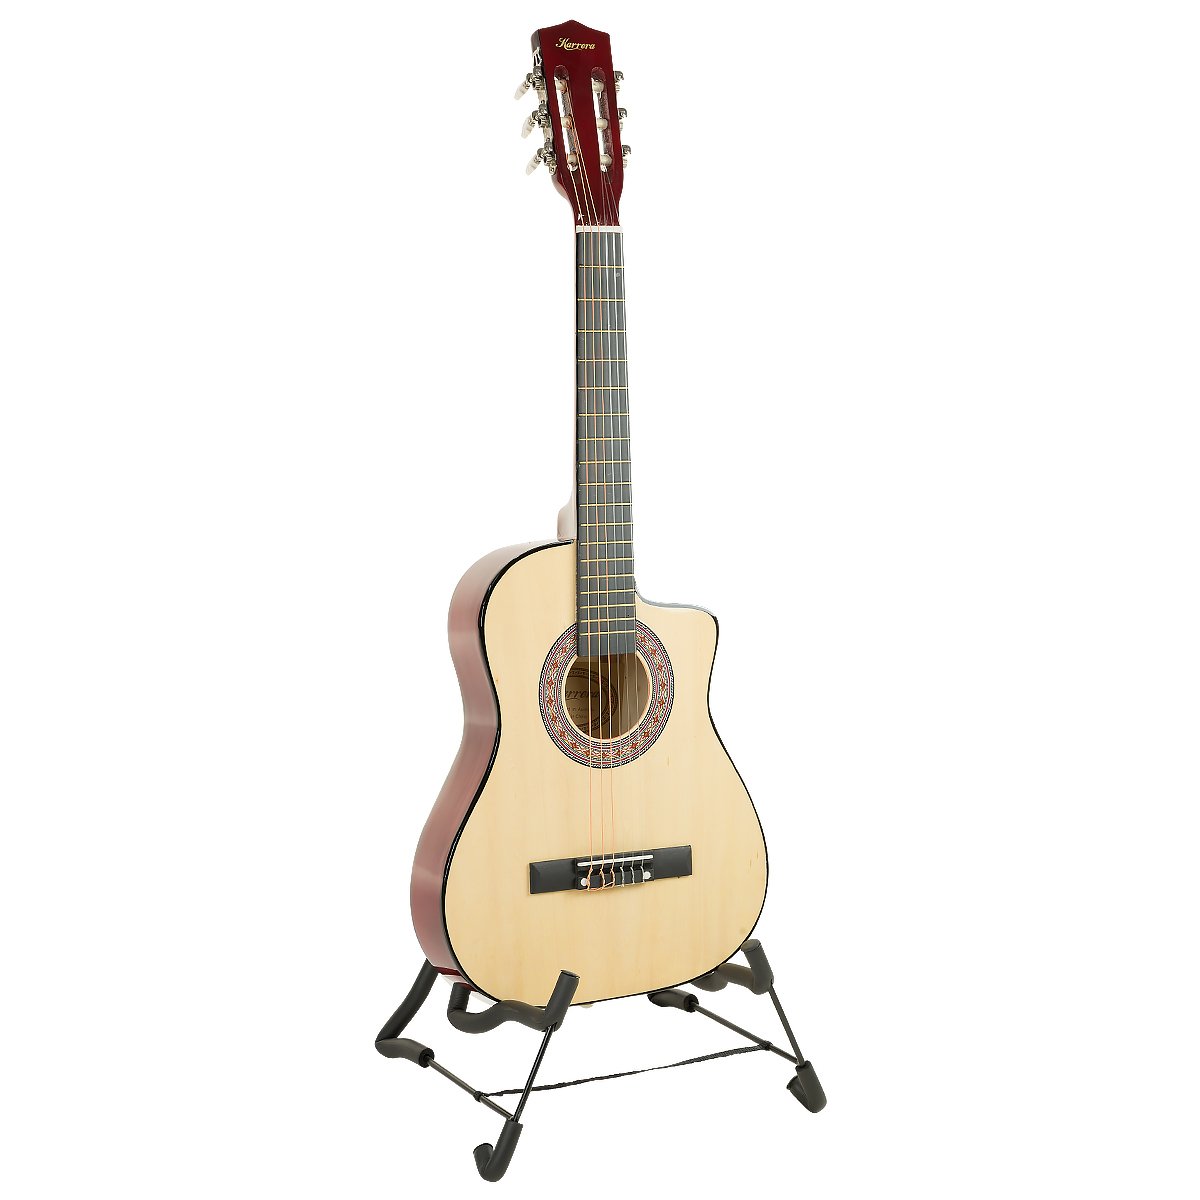 38in Pro Cutaway Acoustic Guitar with guitar bag - Natural 2